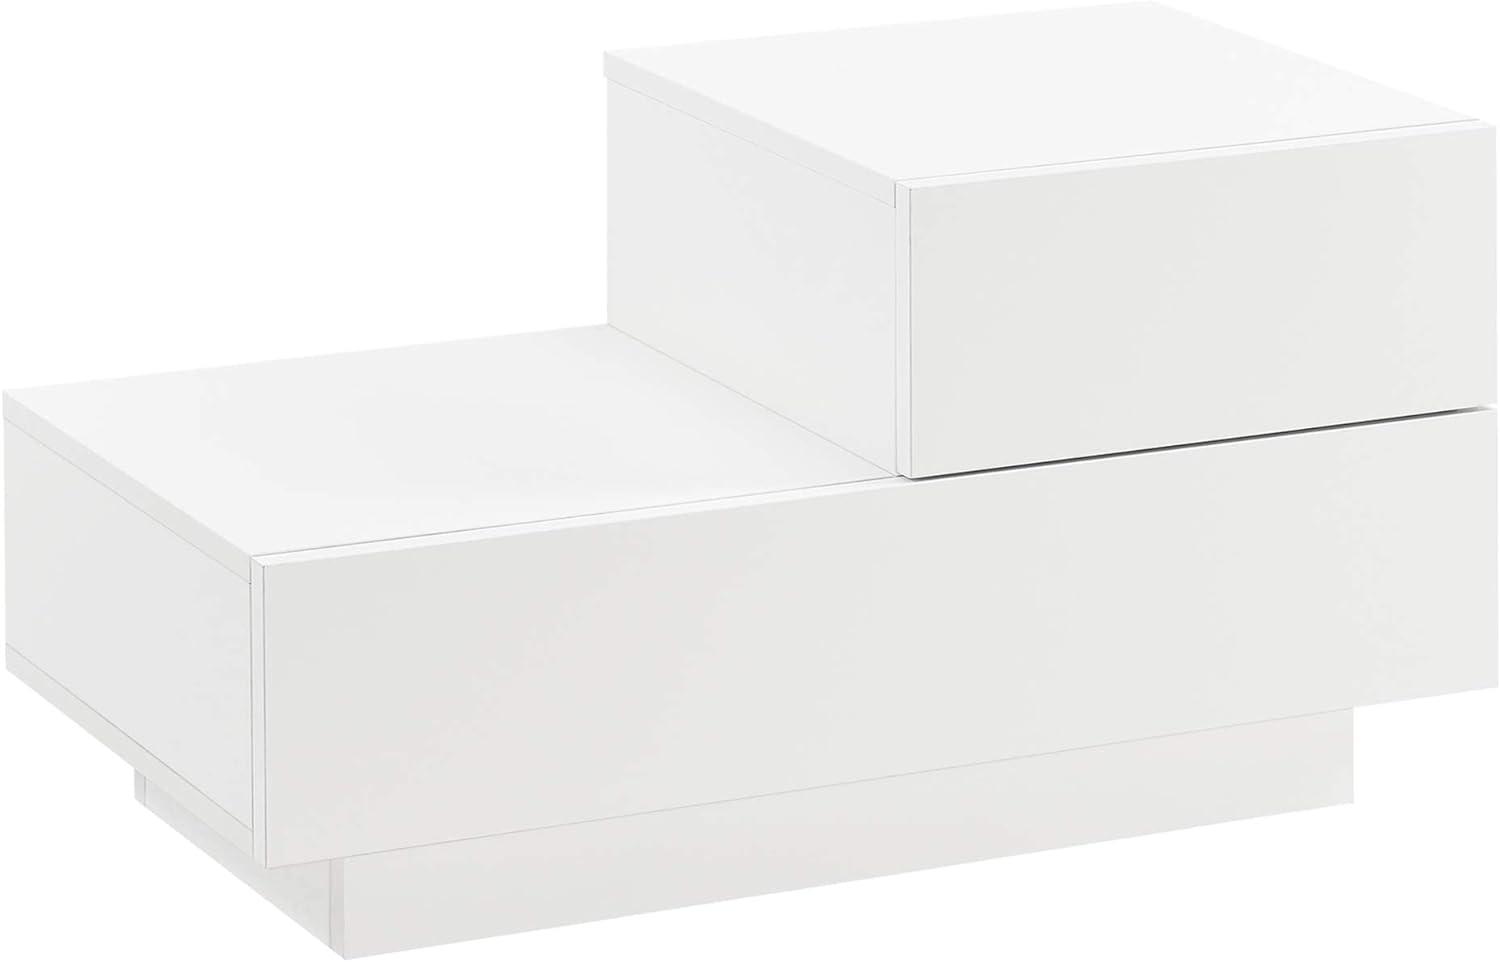 Nachttisch Sebokeng 38x70x35 cm mit Schublade oben rechts Weiß Hochglanz en. casa Bild 1